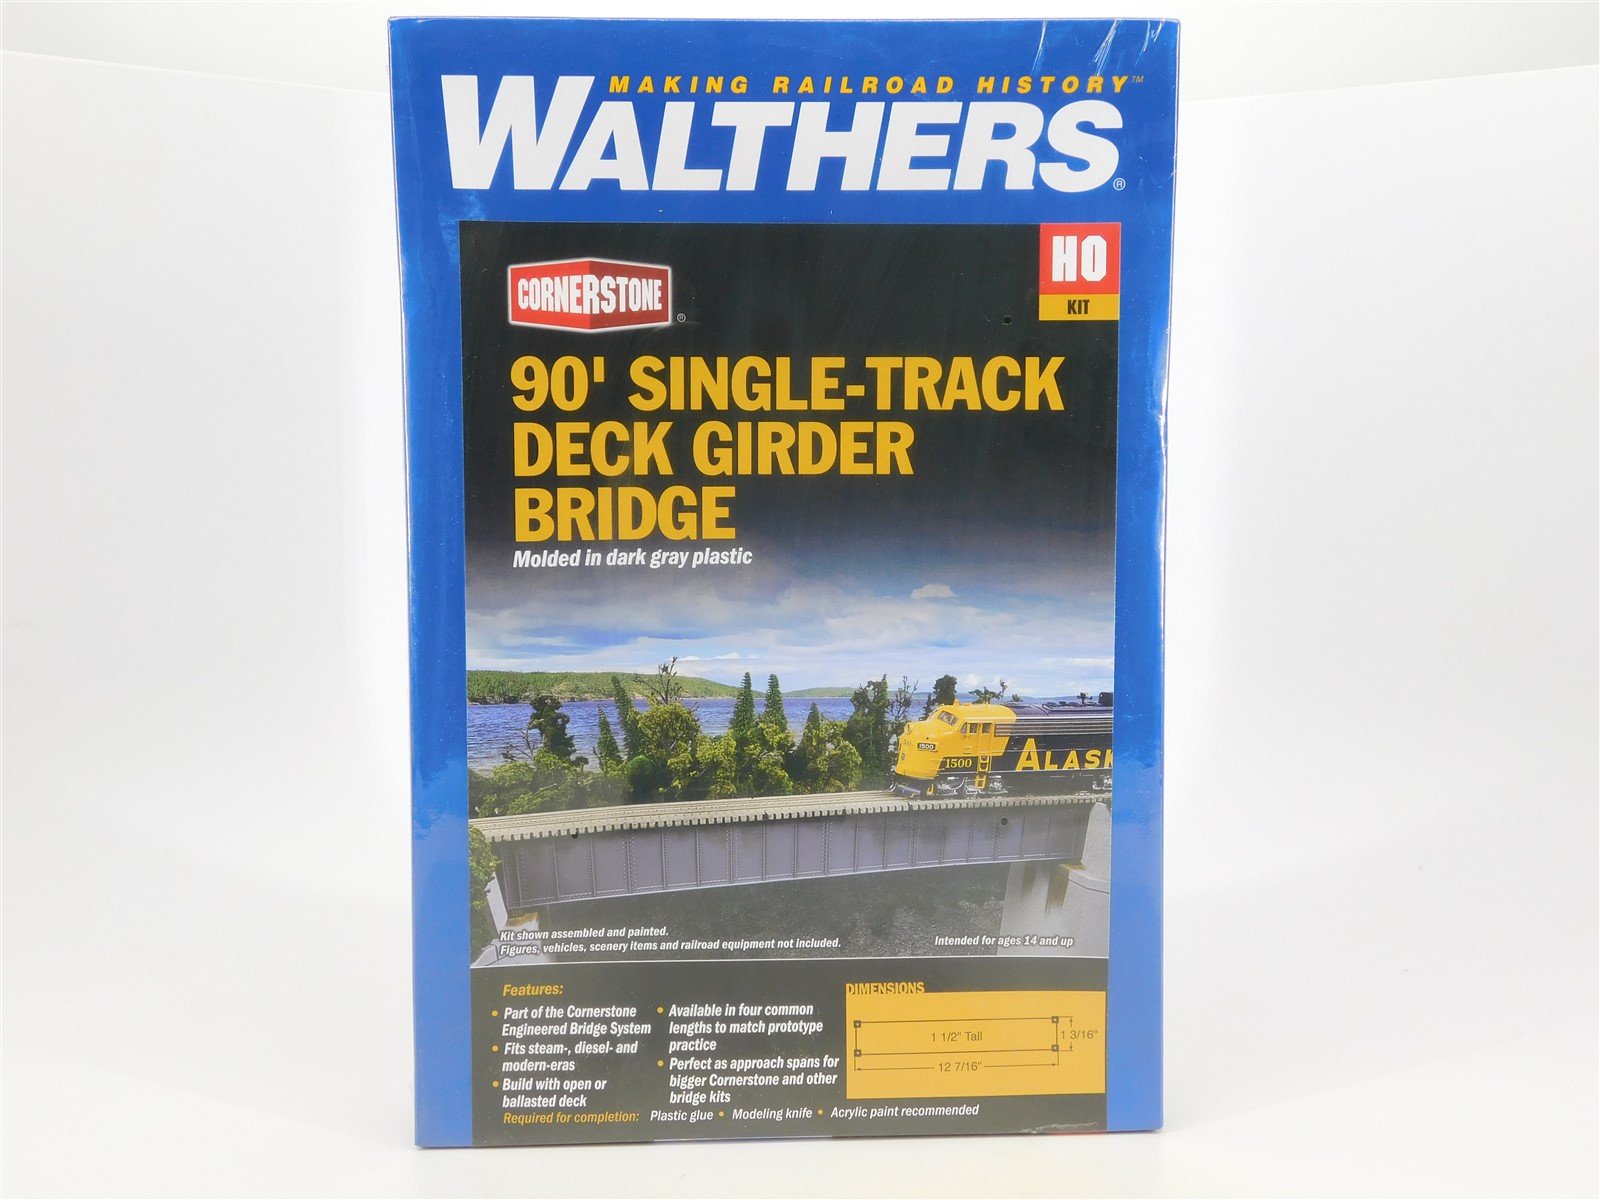 HO Walthers Cornerstone Kit #933-4508 90' Single-Track Deck Girder Bridge SEALED